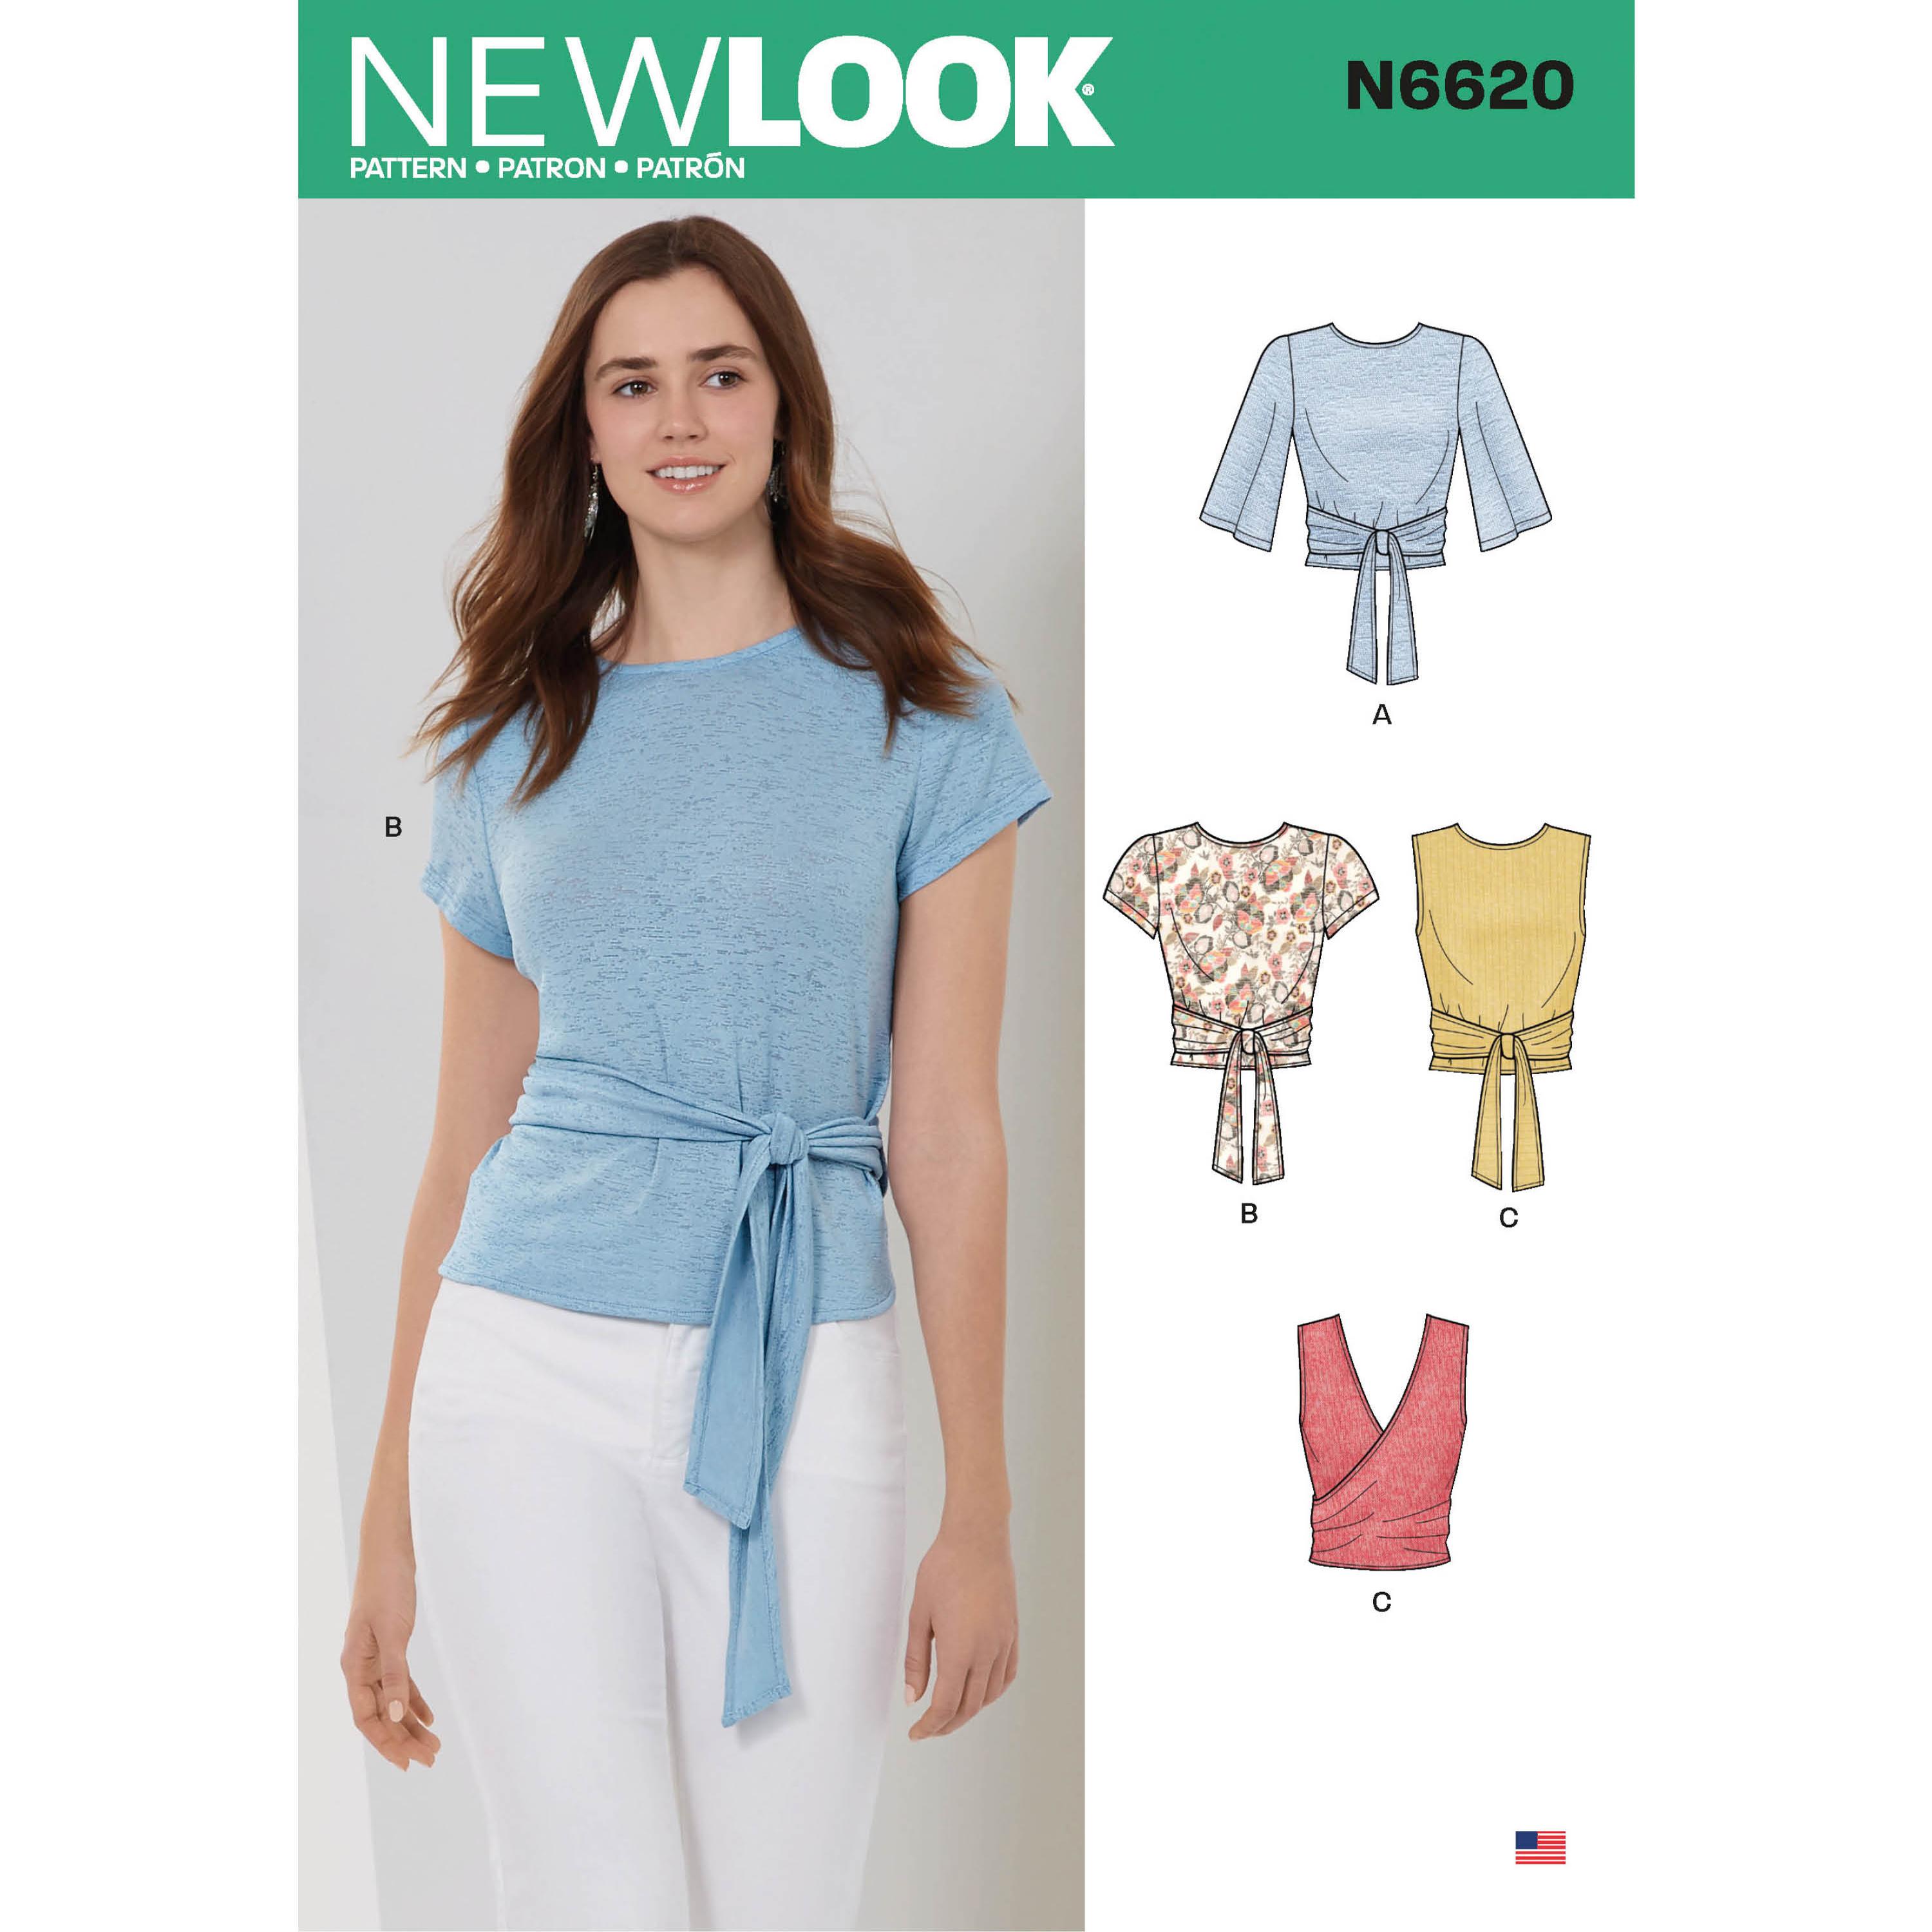 NewLook Sewing Pattern N6620 Misses' Wrap Tops